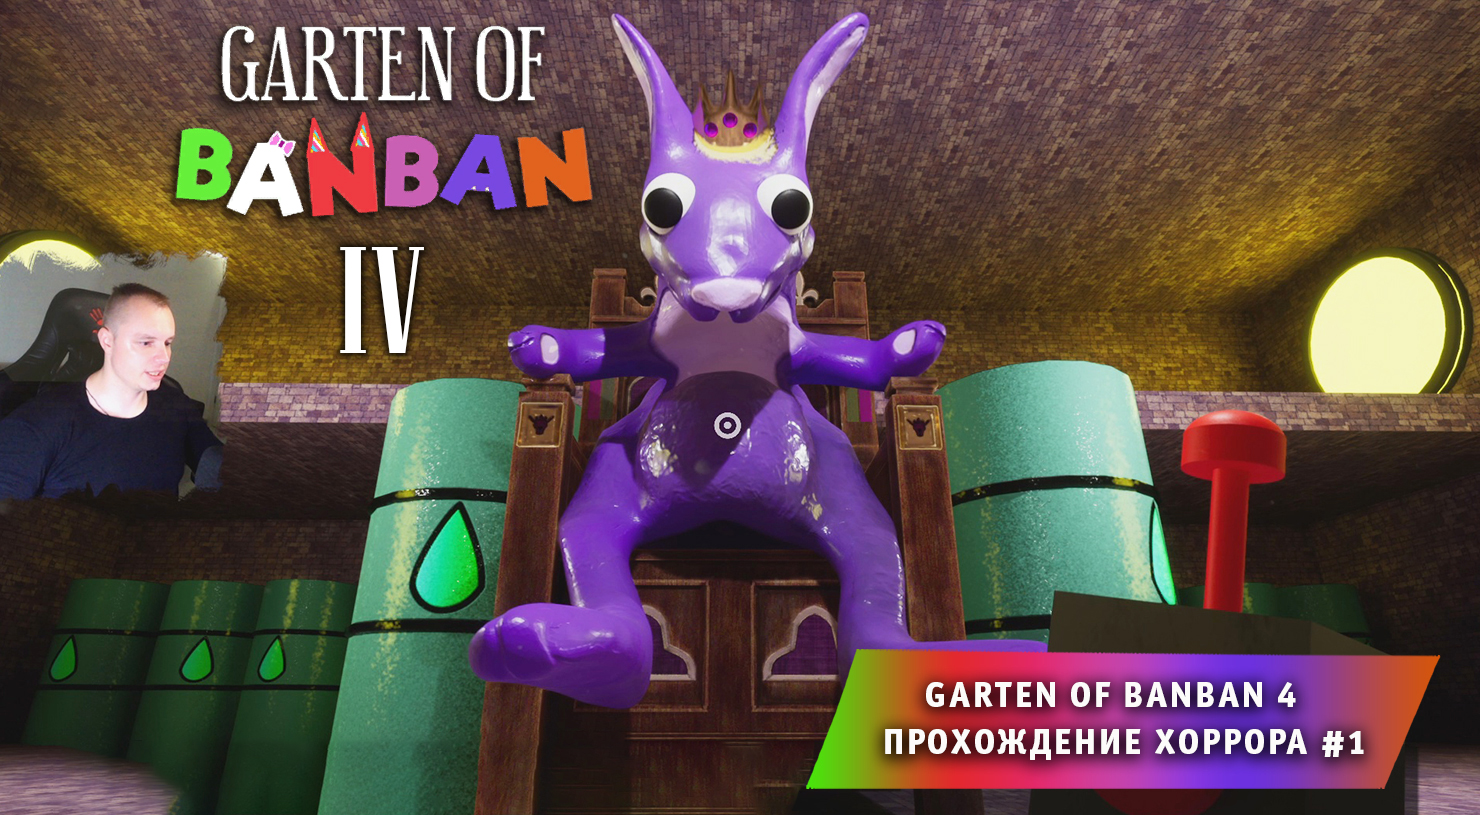 Картон бан бан. Банбан 4. Garden of ban ban 4. Гарден оф Банбан Банбан. Garden of Banban игра.